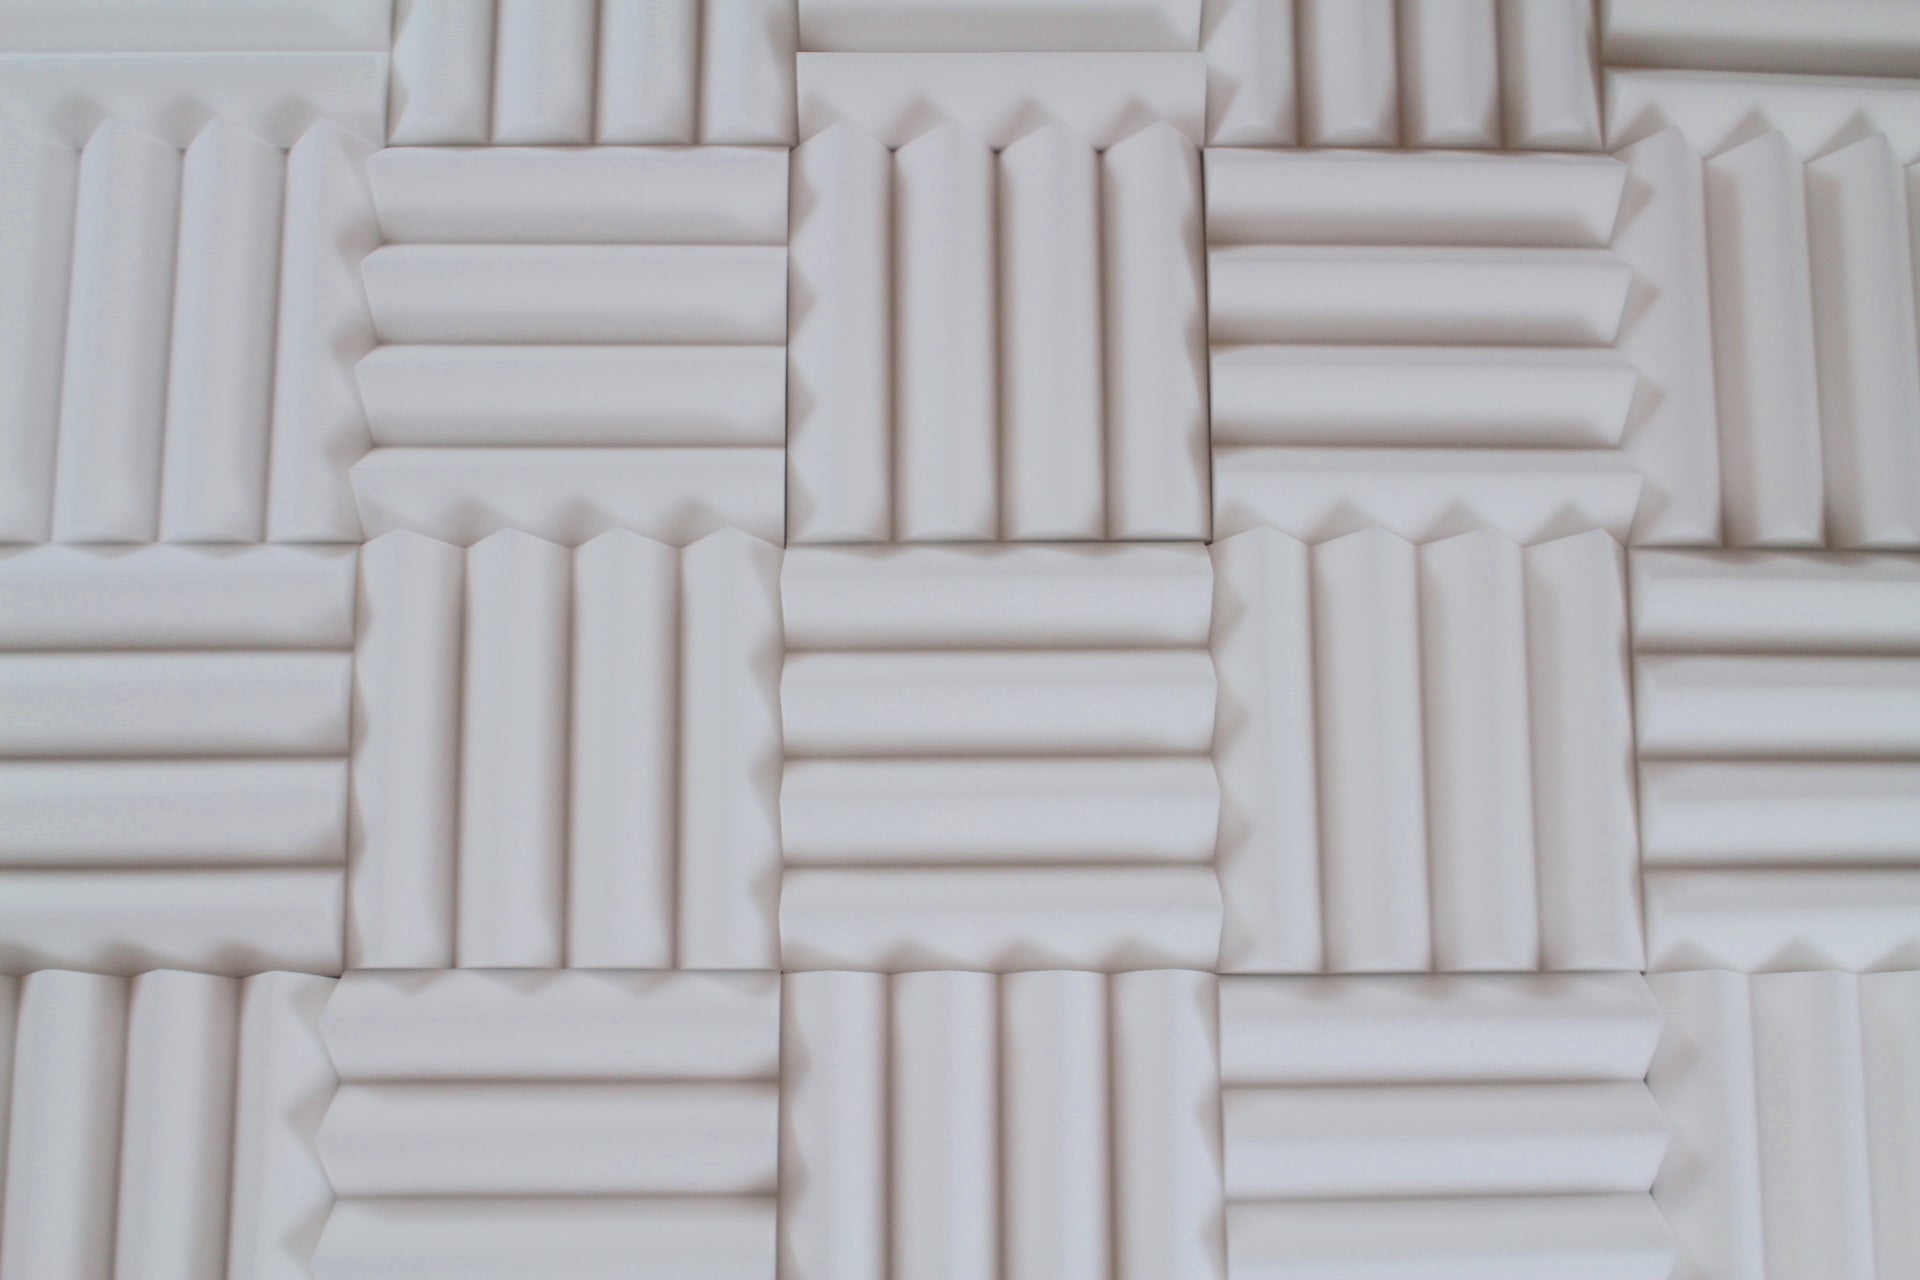 Soundproof Acoustic Foam Panels